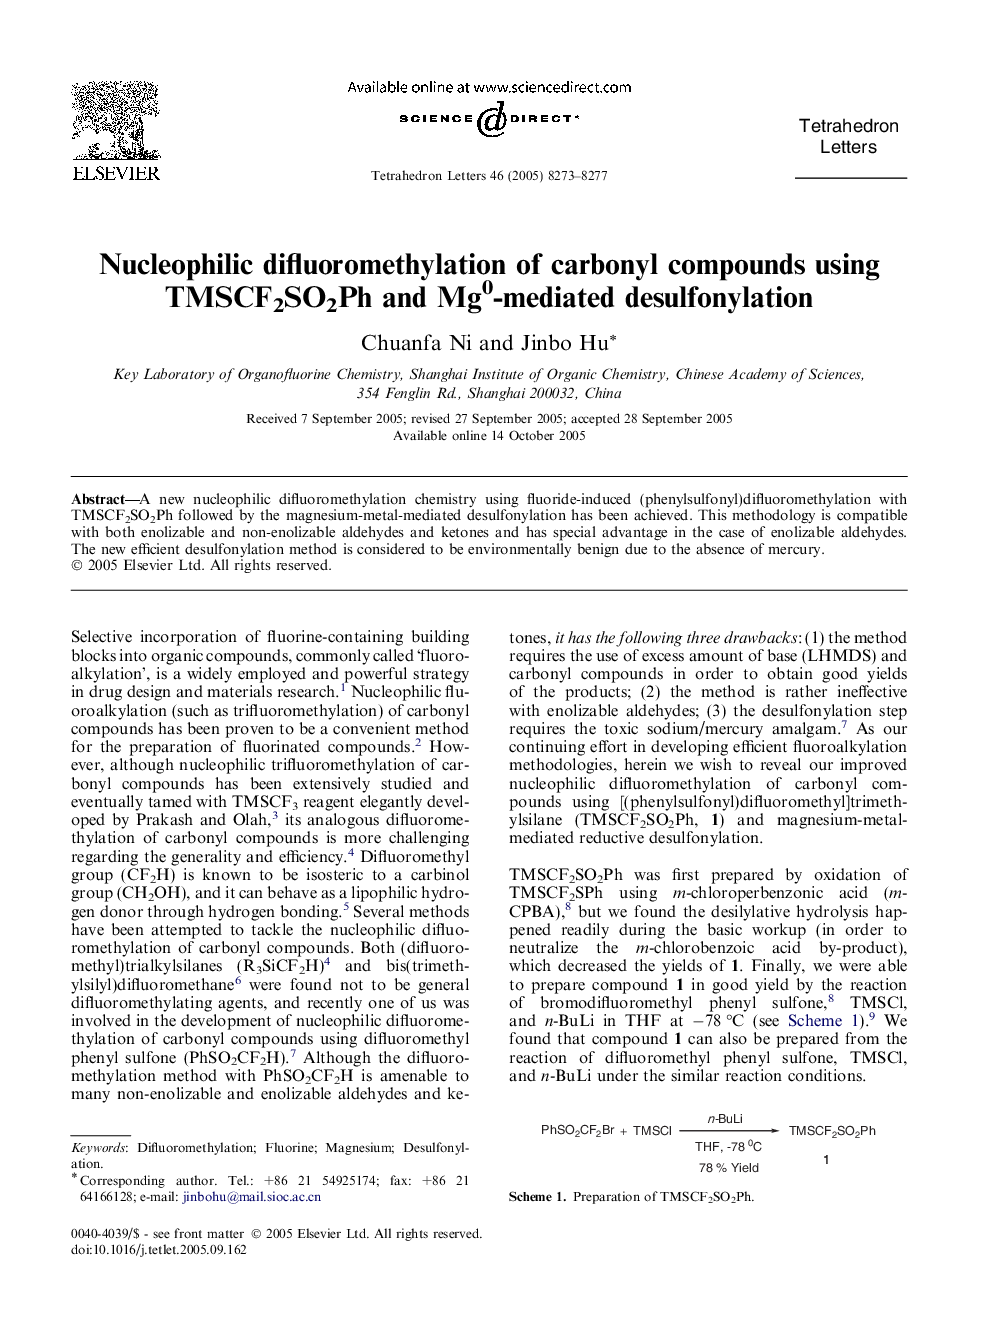 Nucleophilic difluoromethylation of carbonyl compounds using TMSCF2SO2Ph and Mg0-mediated desulfonylation